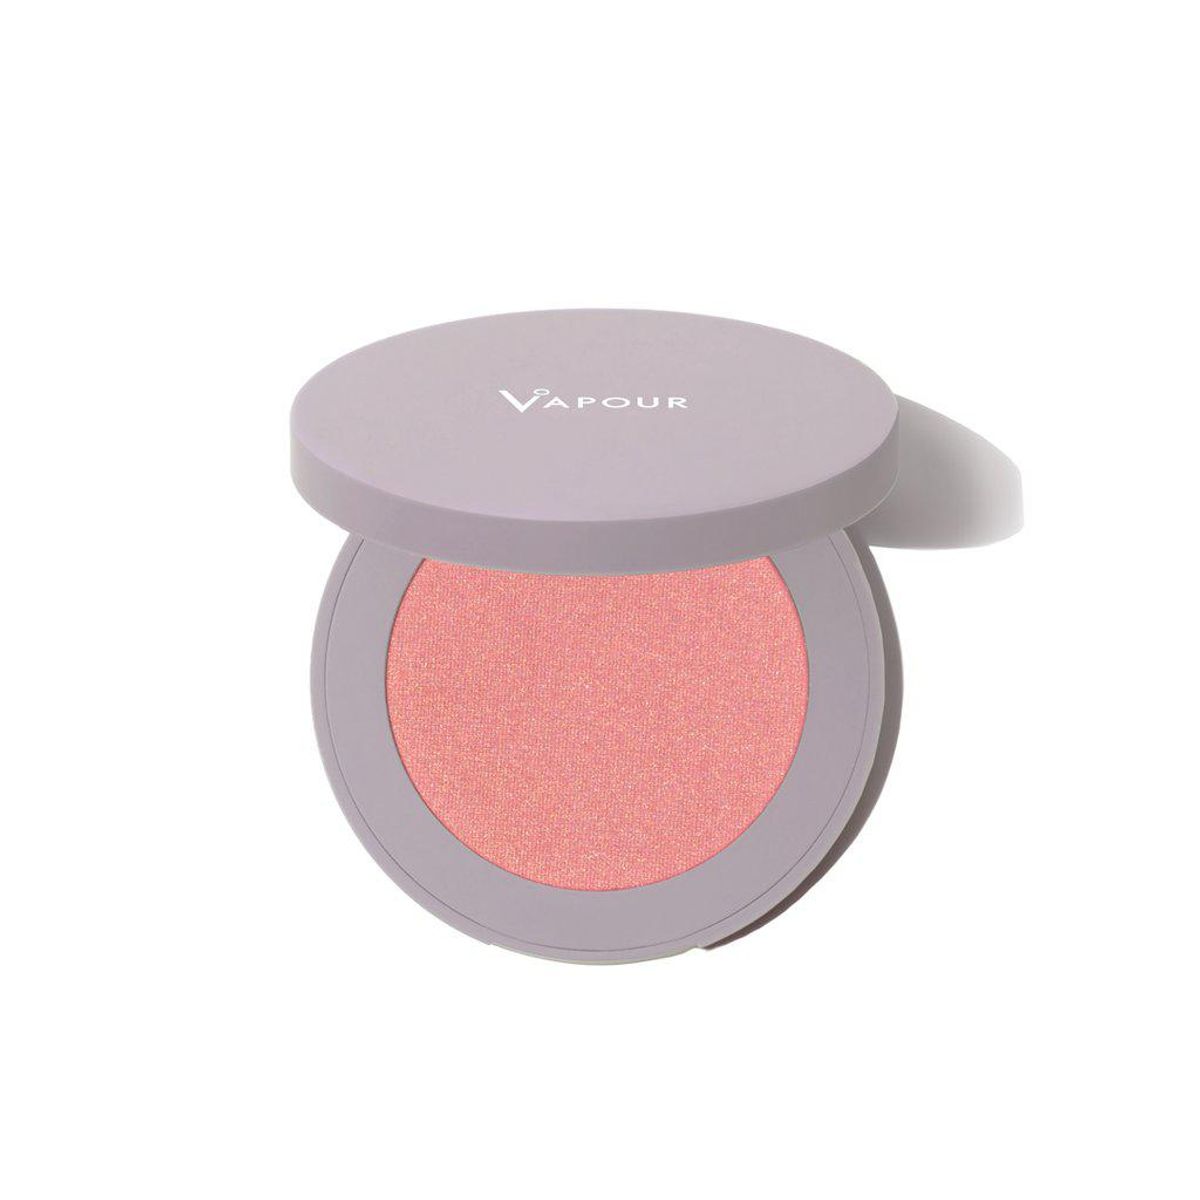 vapour beauty blush powder